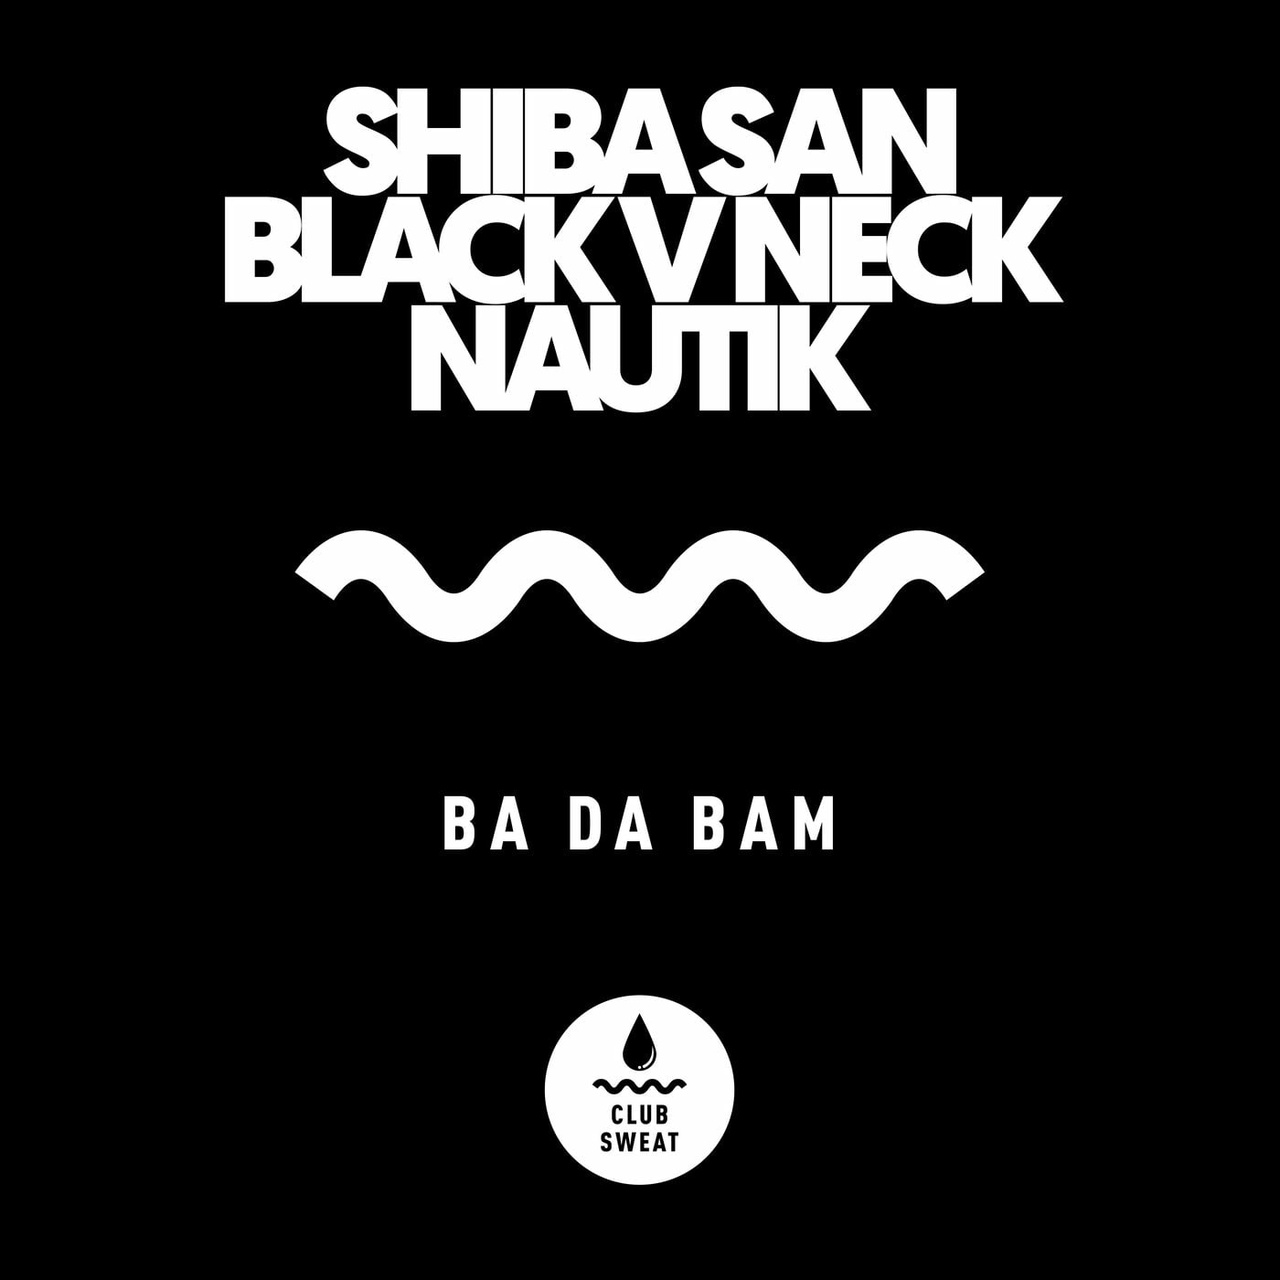 Shiba San, Black V Neck, Nautik (US) - Ba Da Bam (Extended Mix)